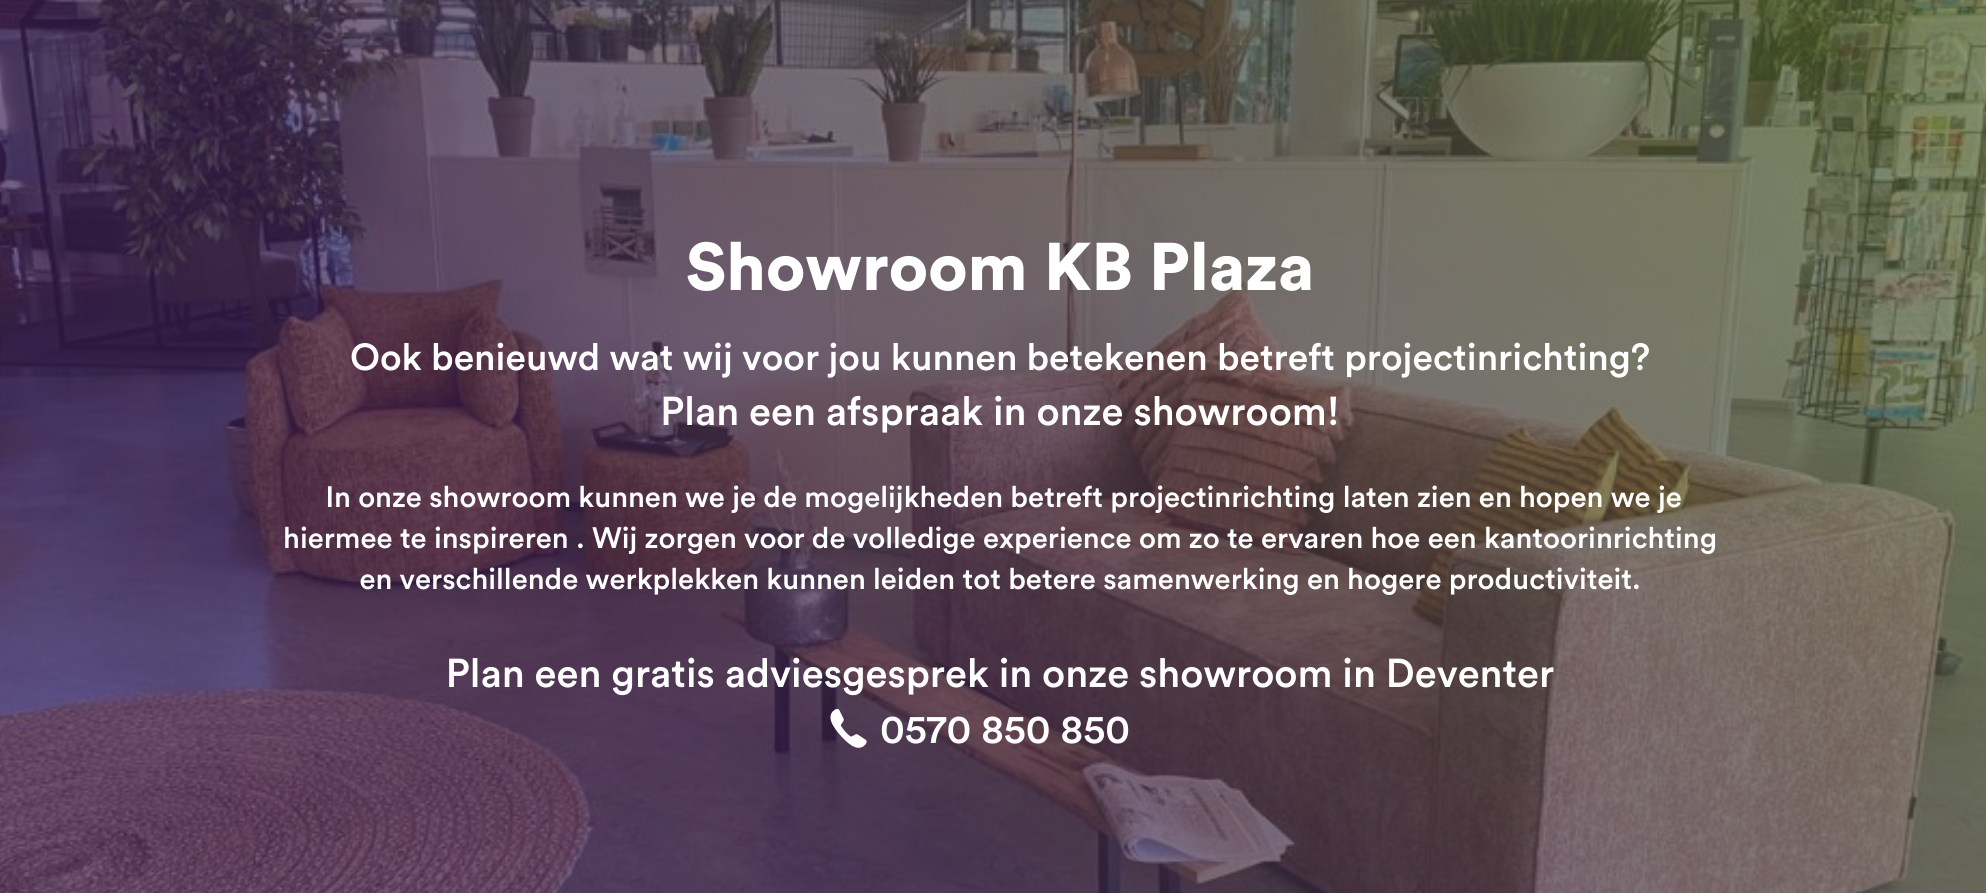 Showroom_KB_Plaza_knip.png